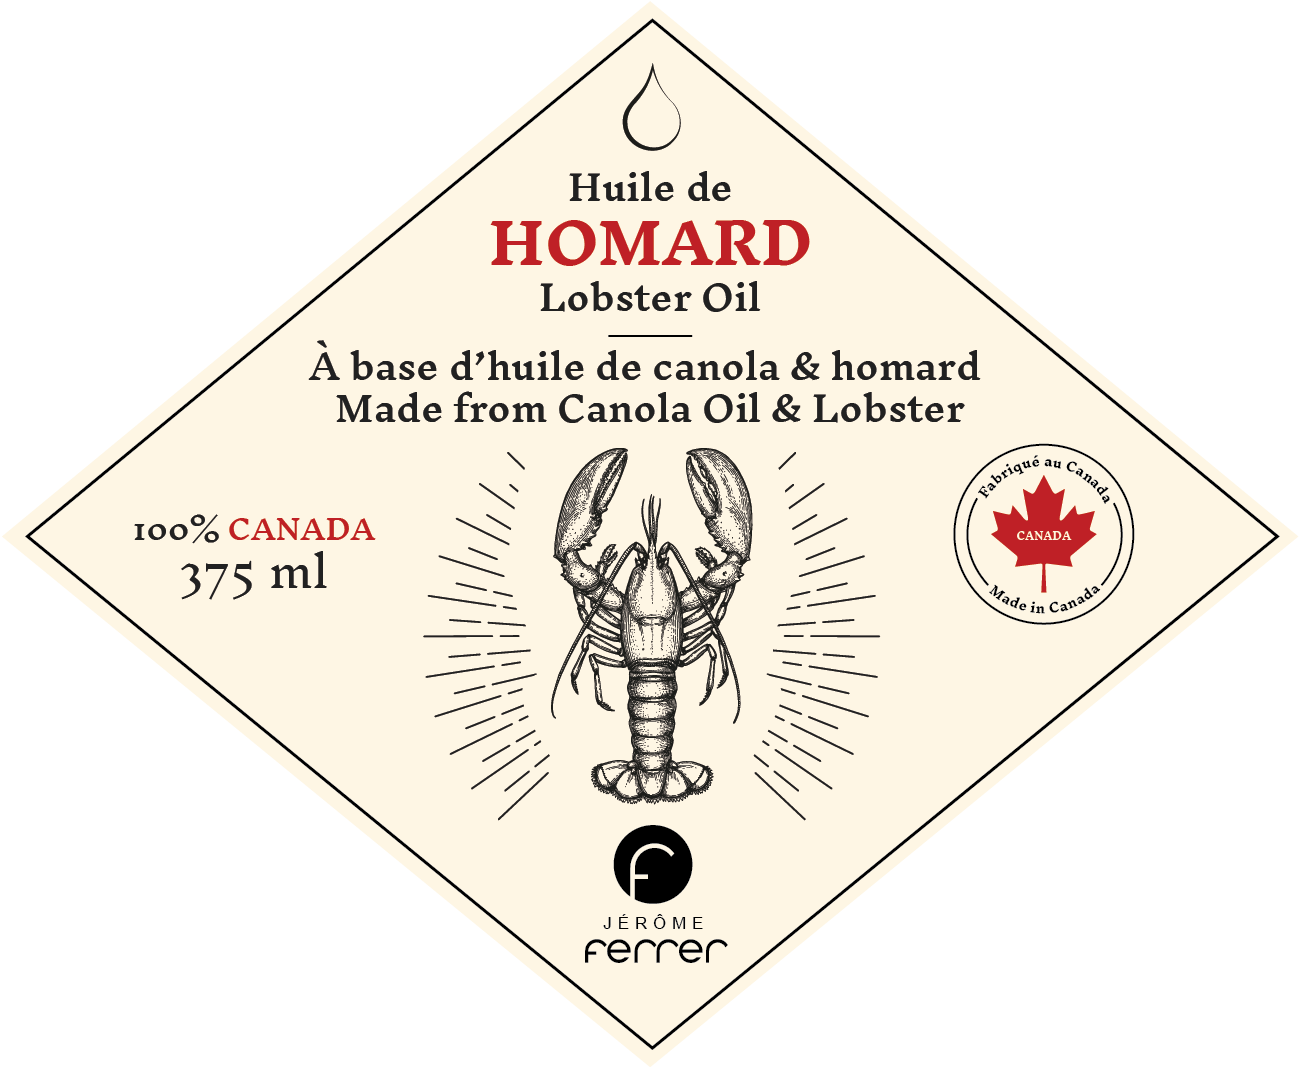 Huile de homard canadien / Canadian Lobster Oil